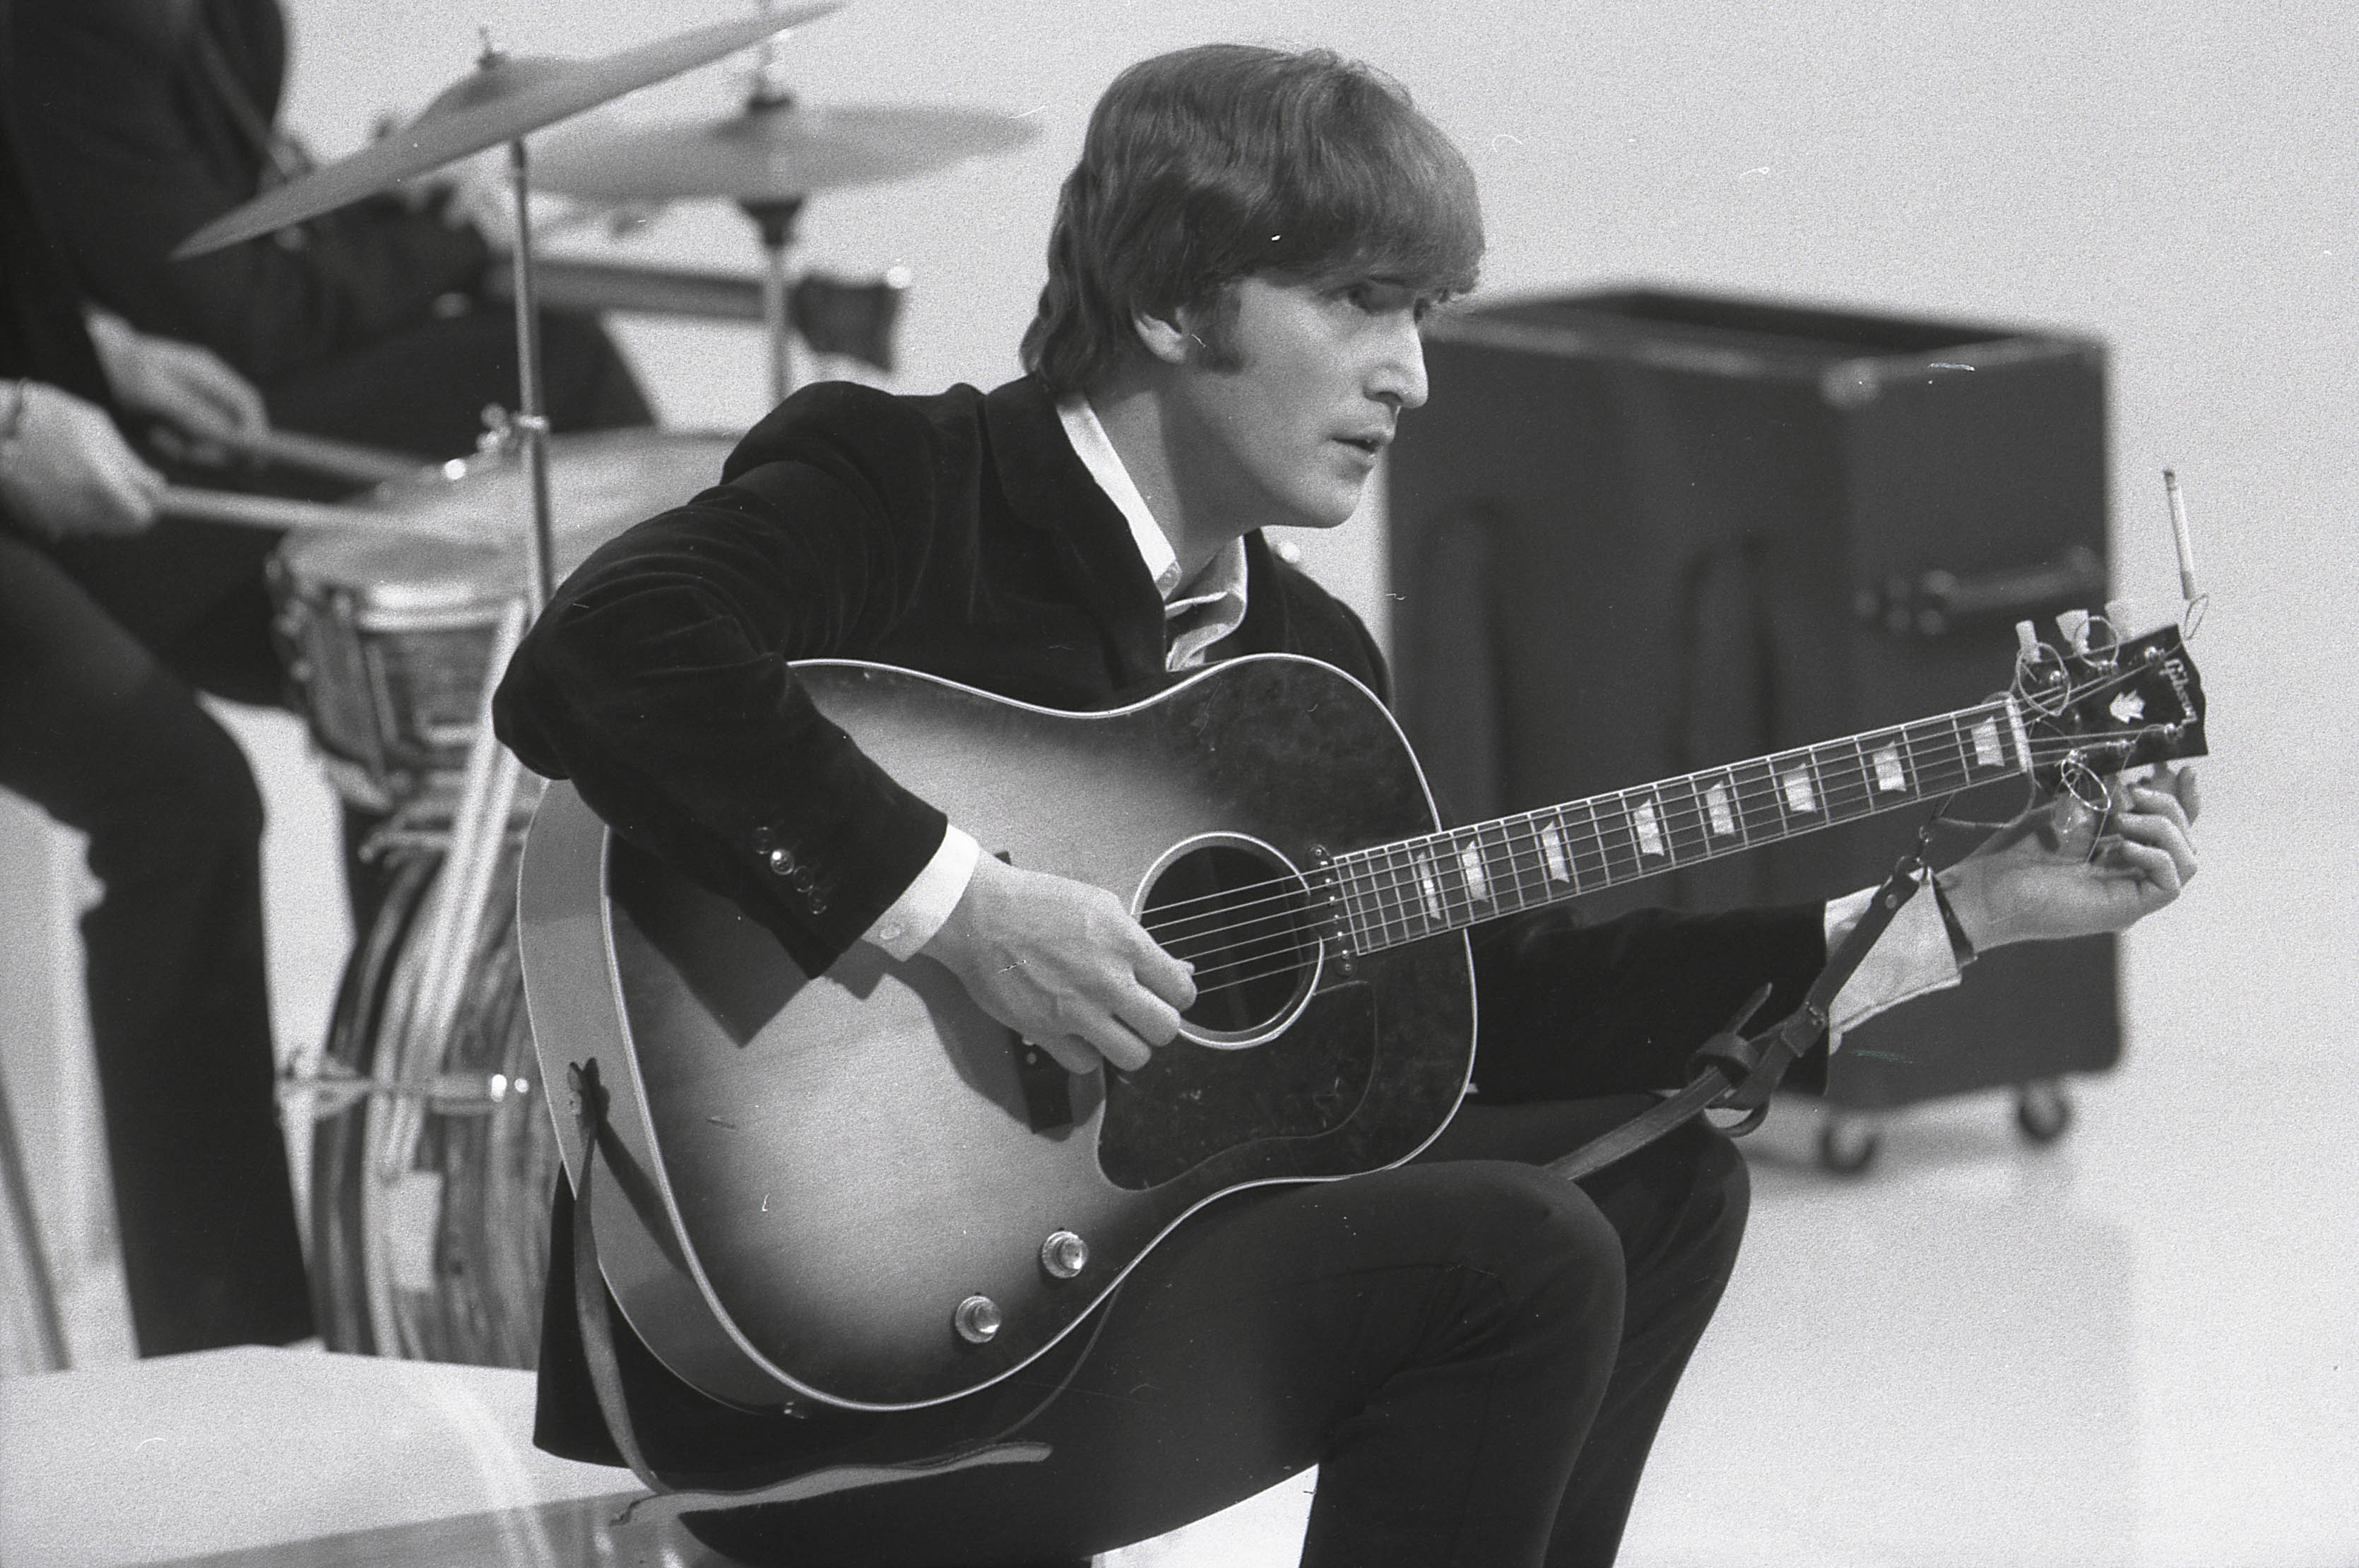 John Lennon wearing a suit during The Beatles' 'The White Album' era